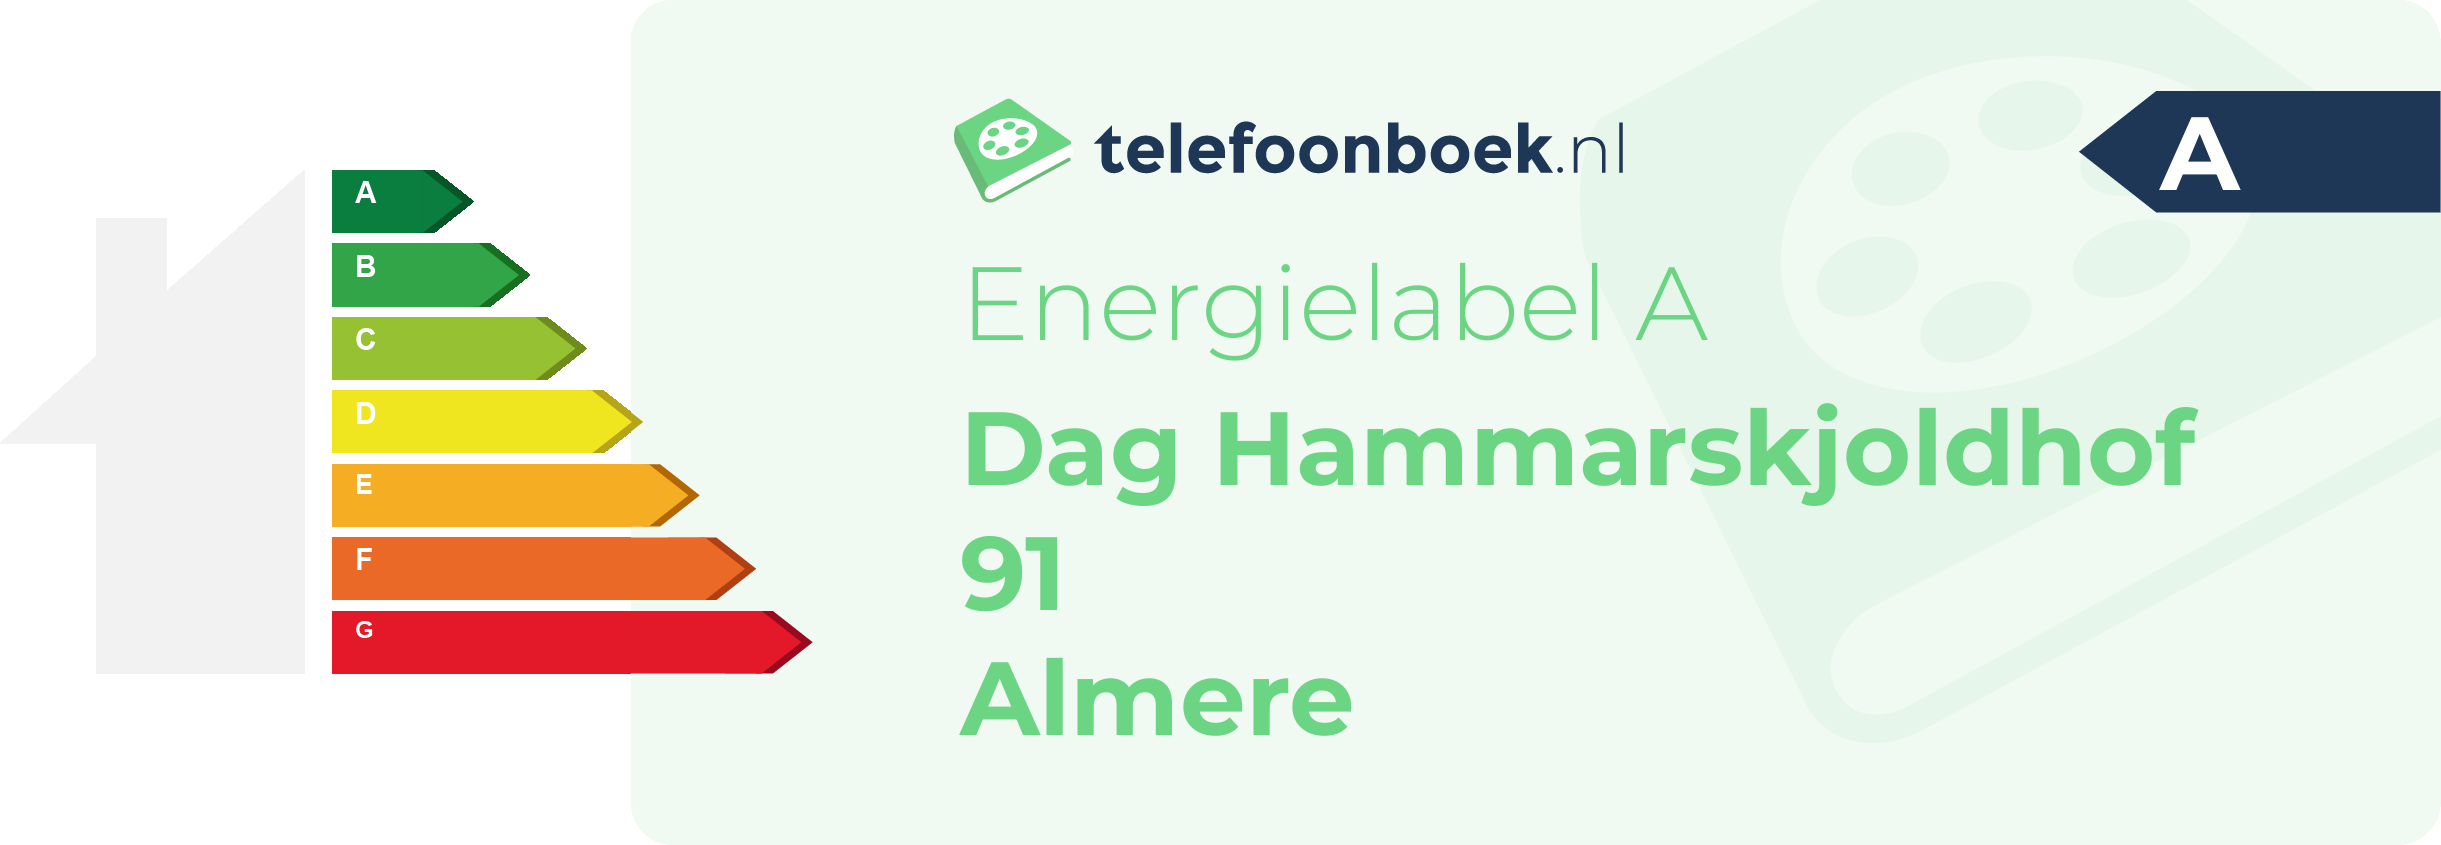 Energielabel Dag Hammarskjoldhof 91 Almere